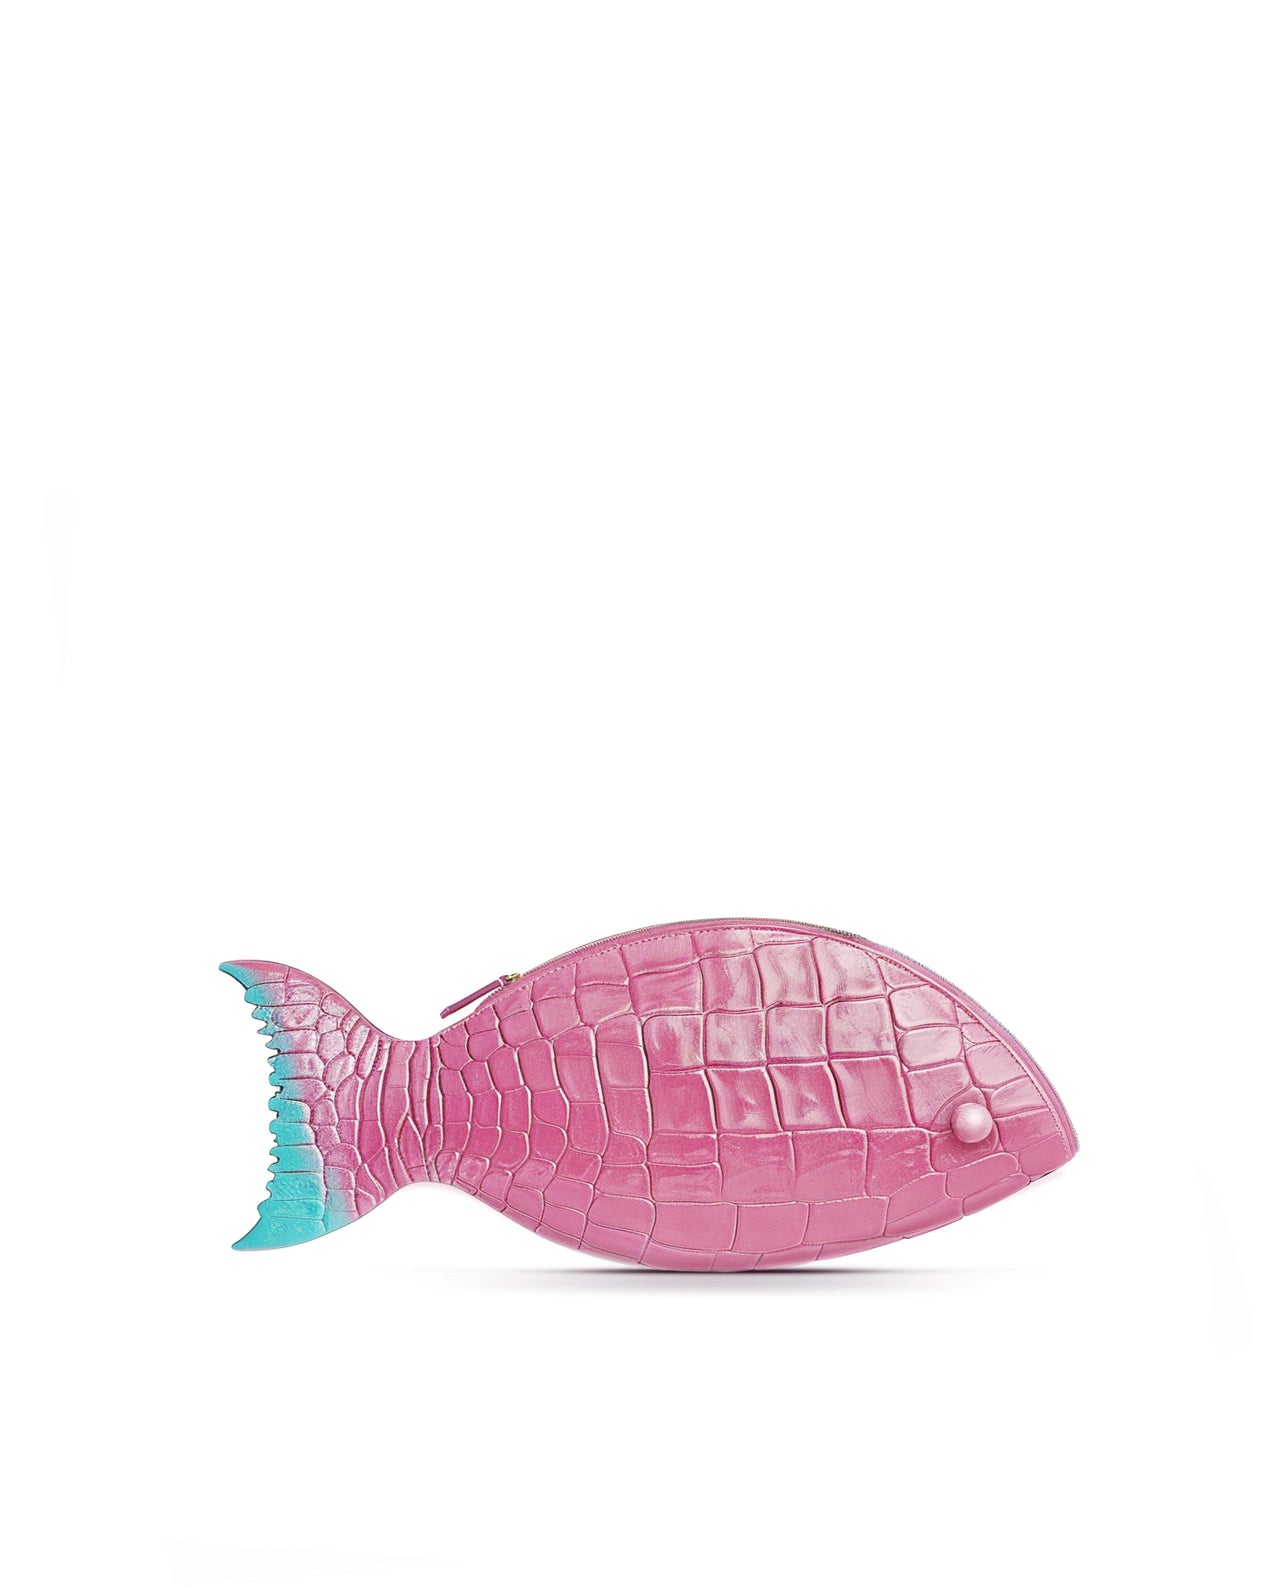 Pink gradient fish shape clutch